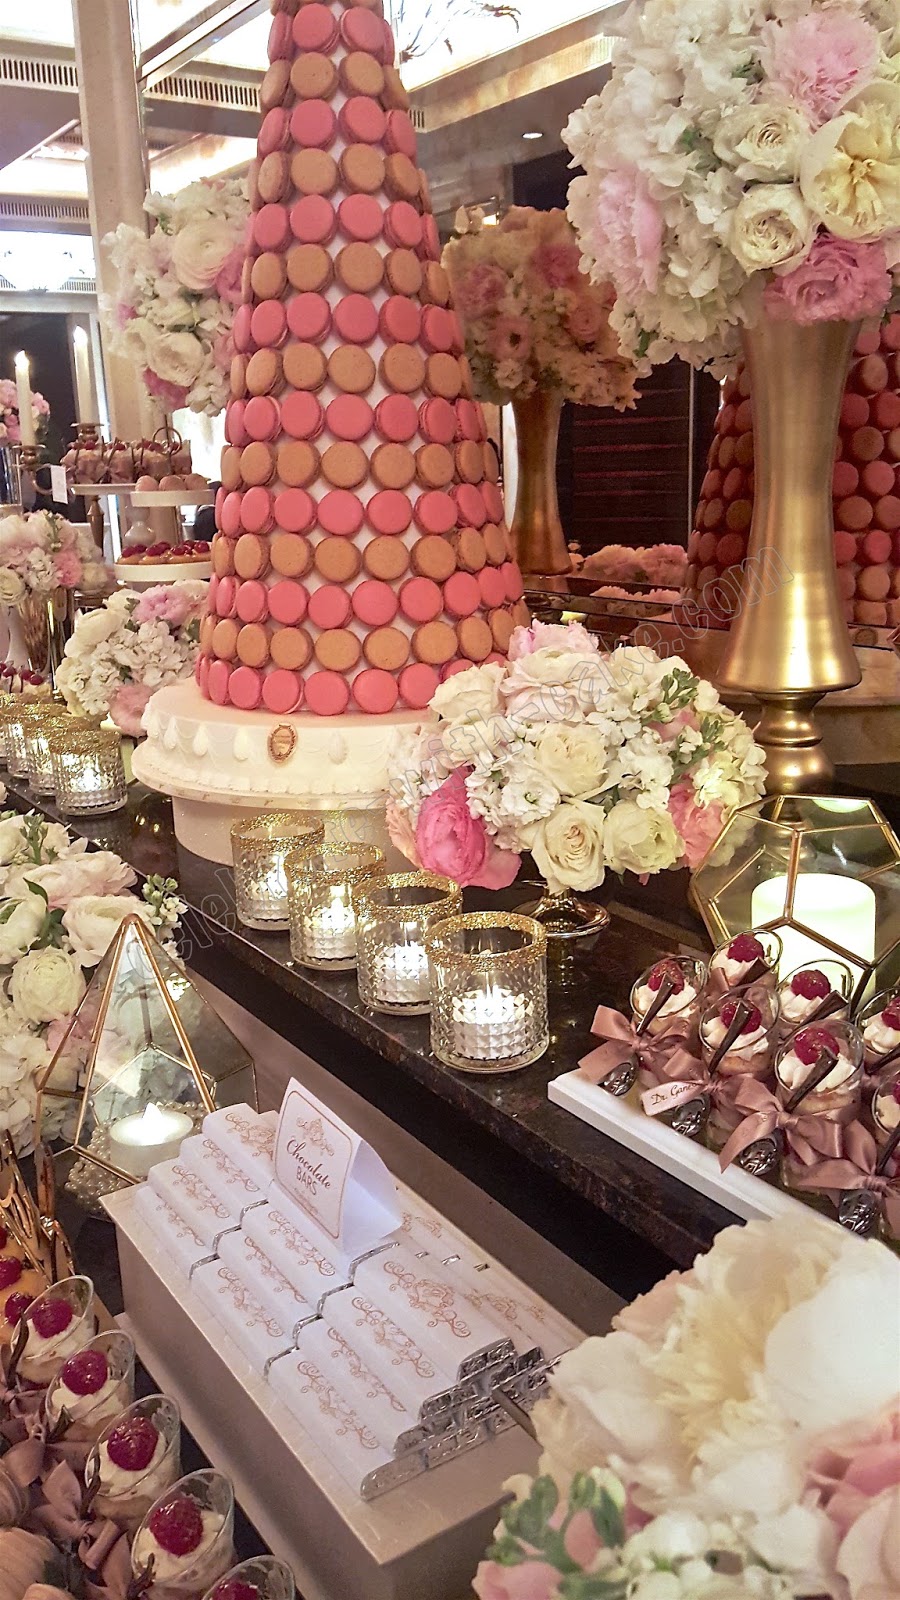 Celebrate with Cake!: Lavish Wedding Dessert Table